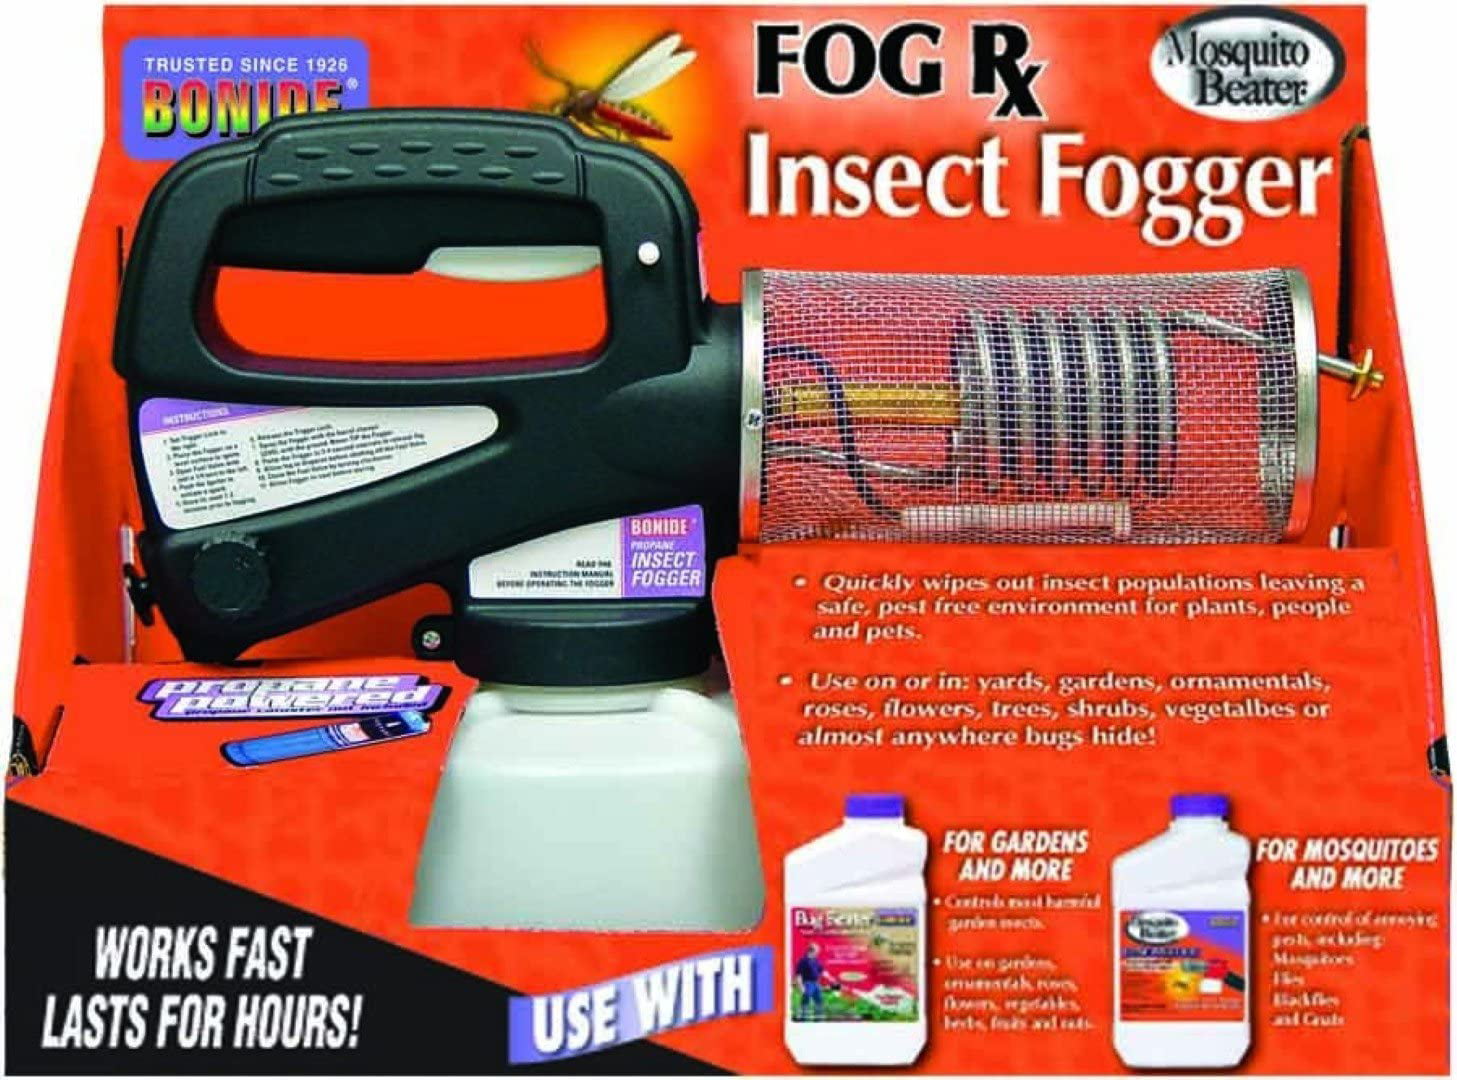 Bonide 420 FogRx Propane Insect Fogger, Propane insect